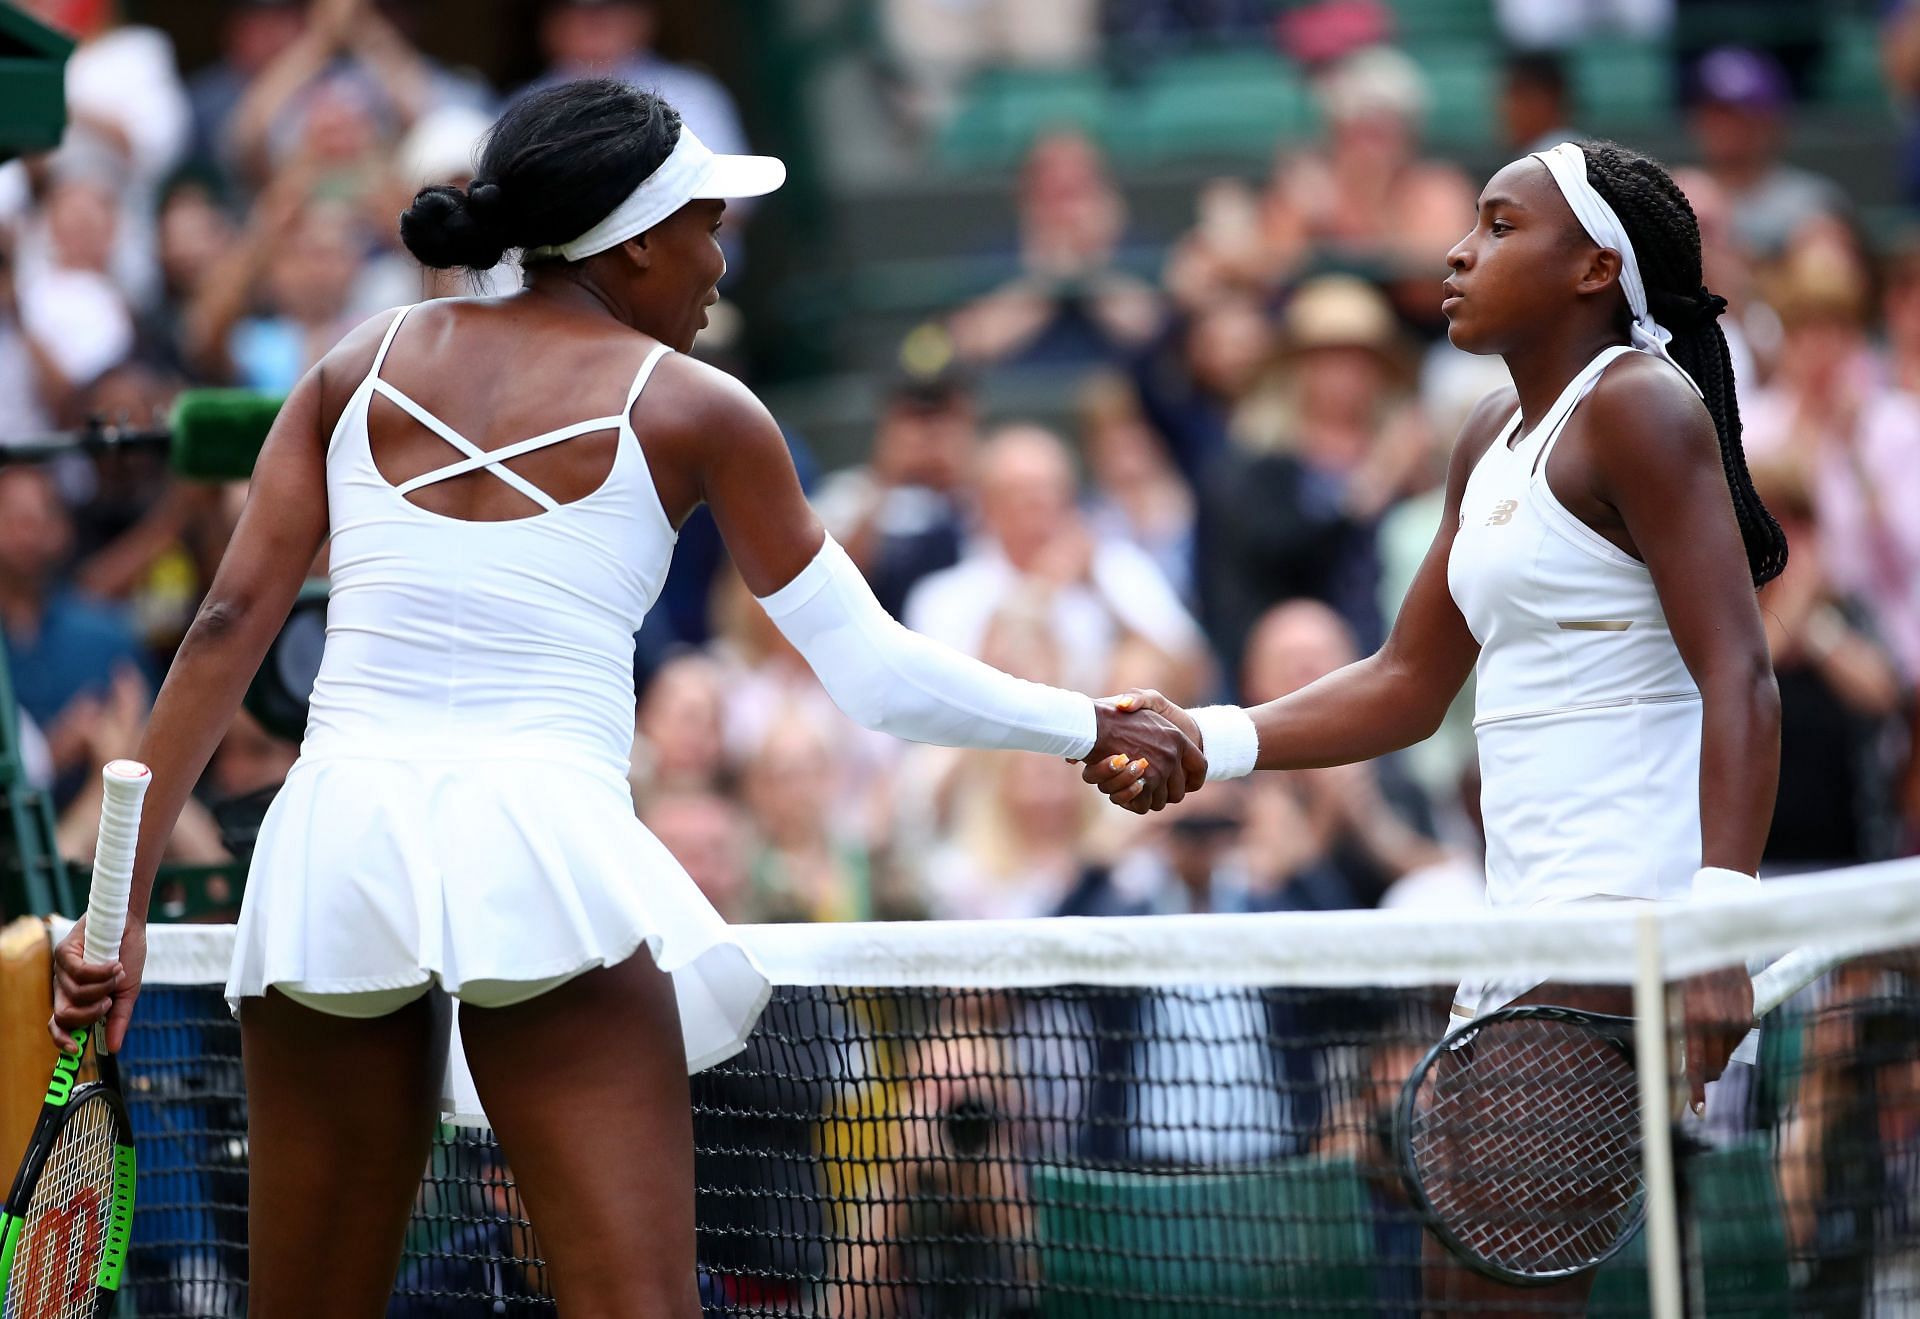 Coco Gauff triumphed over Venus Williams at Wimbledon 2019